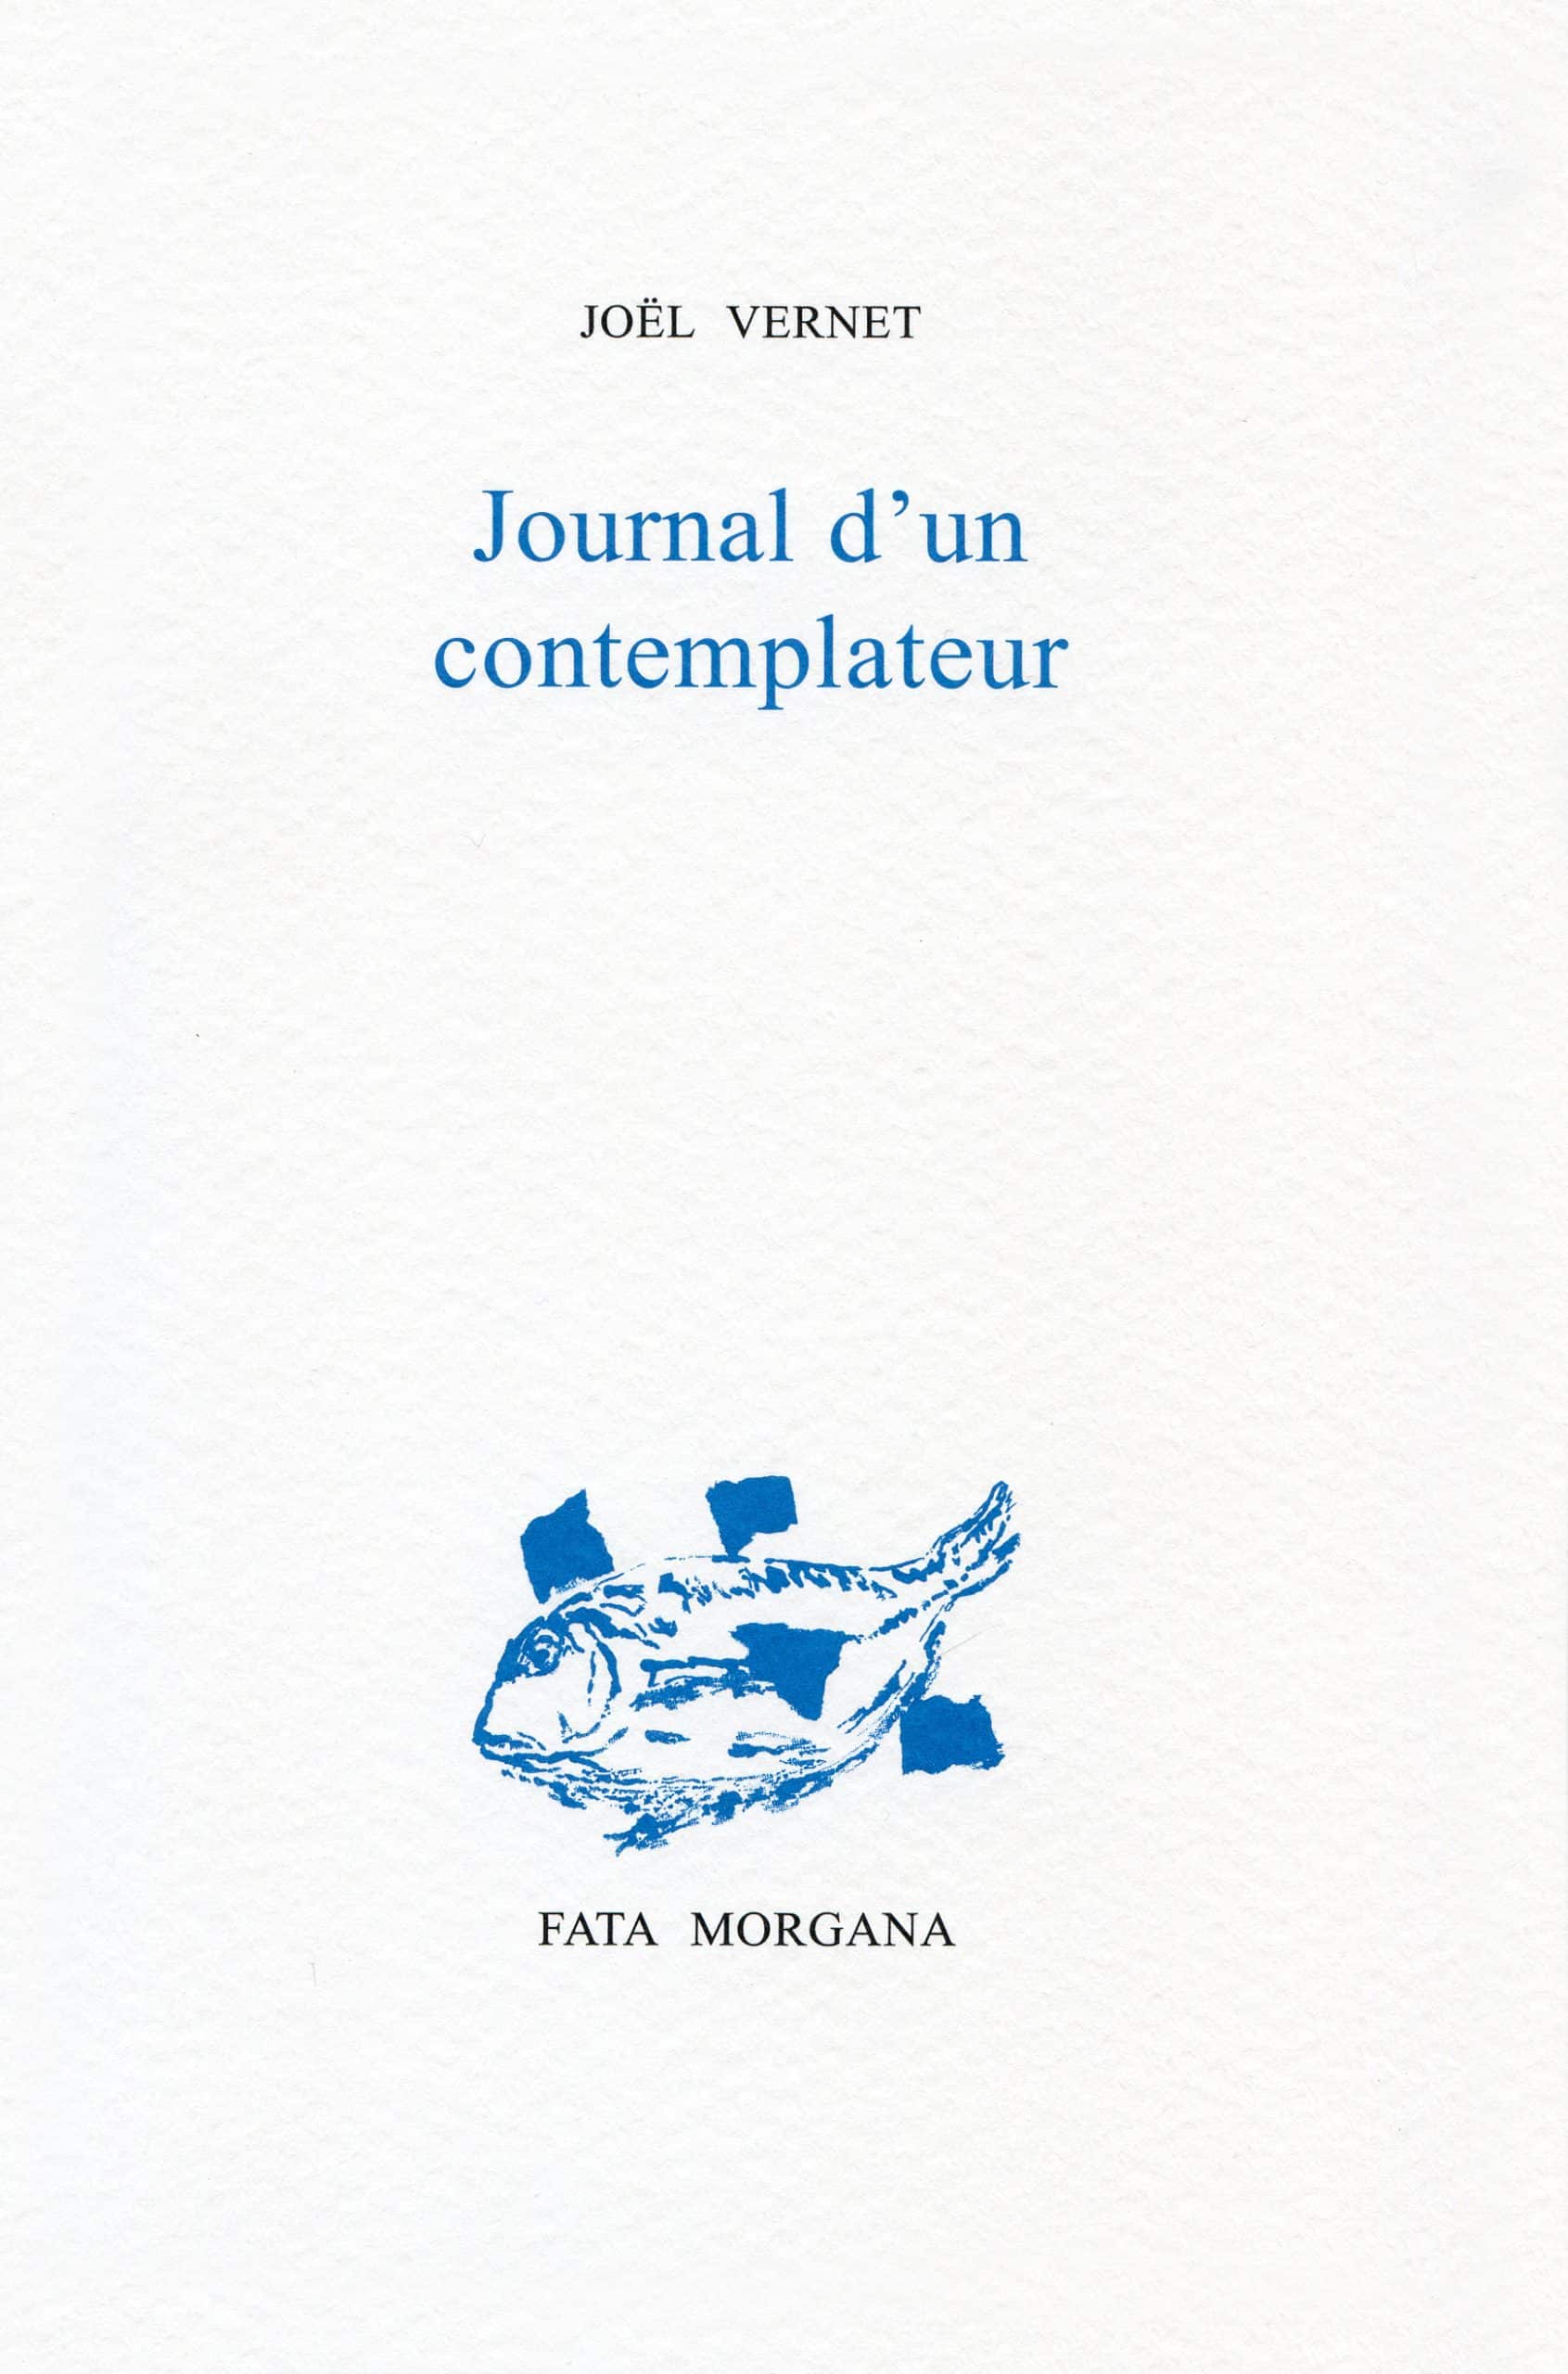 "Journal d'un contemplateur", de Joël Vernet